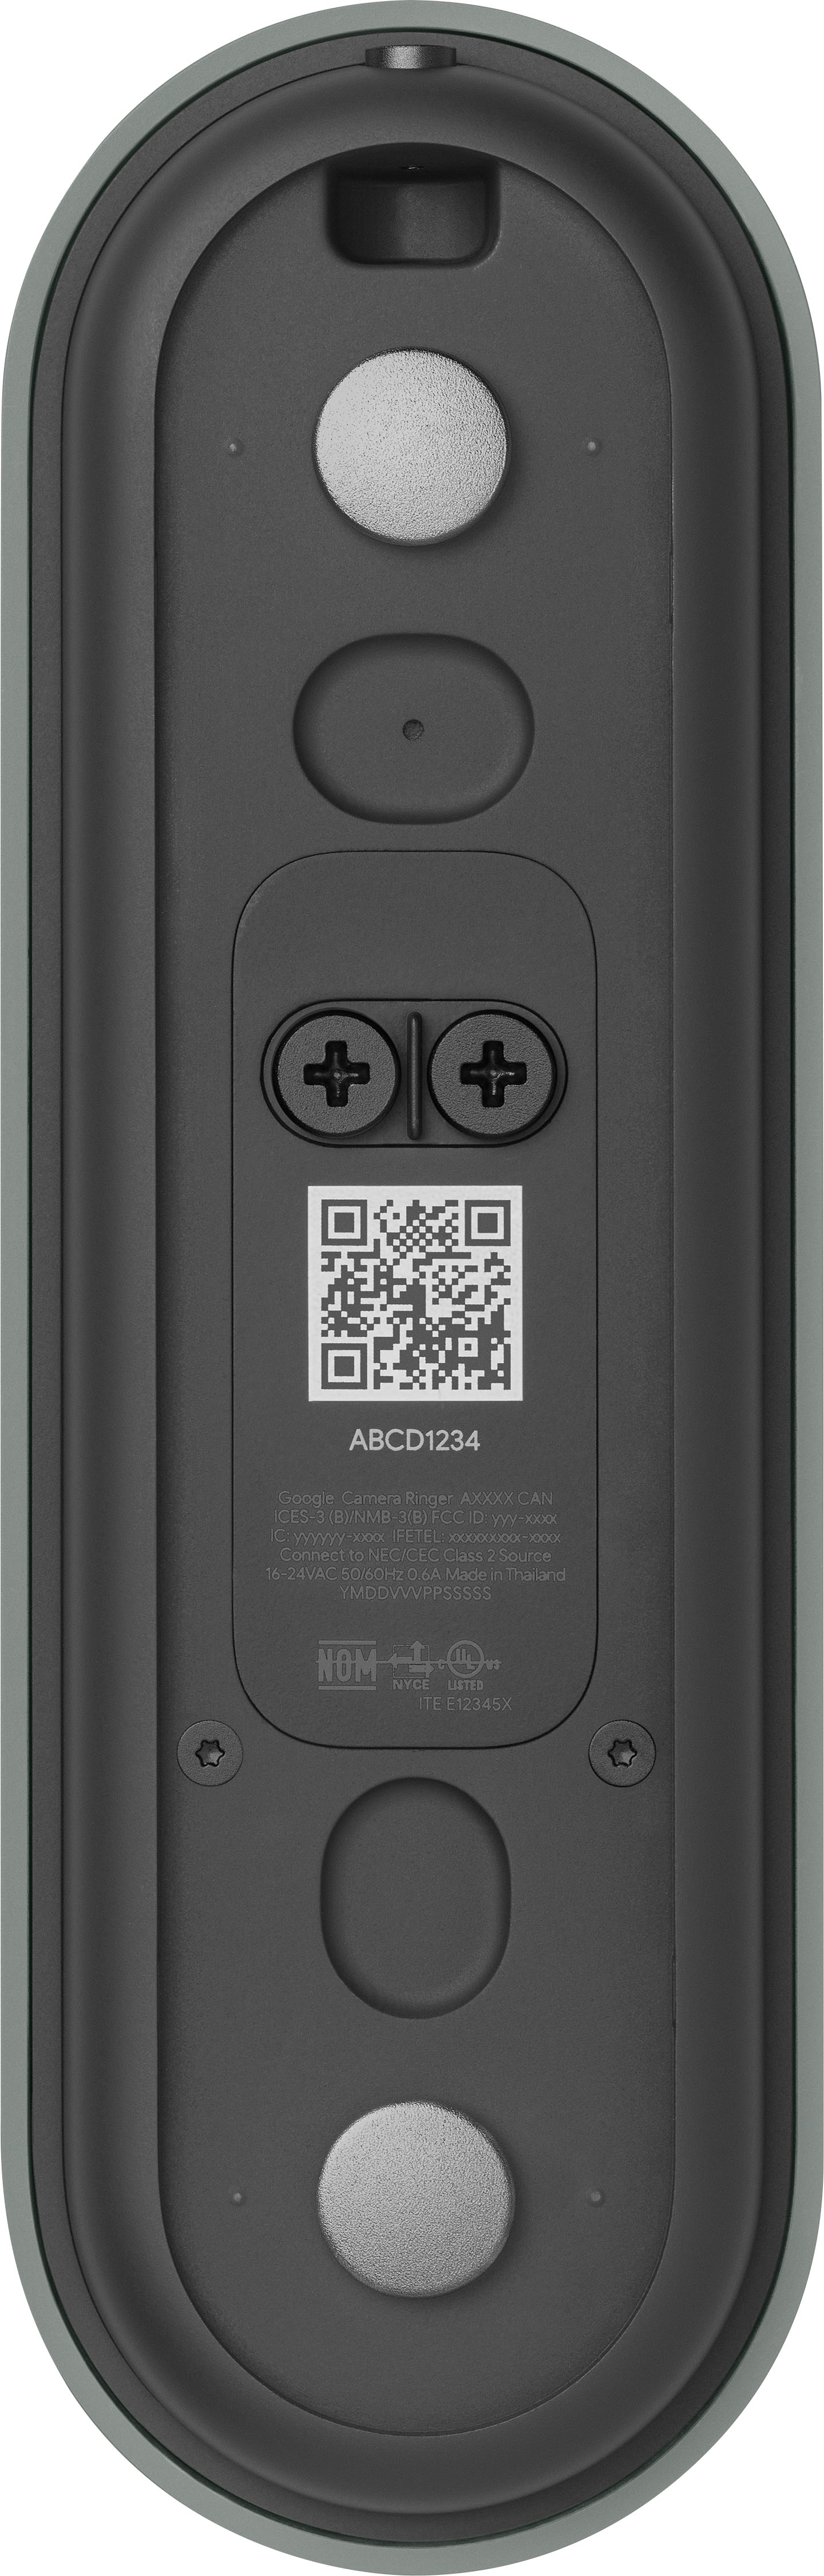 Google Nest Doorbell Wired (2nd Generation) Ivy GA03697-US - Best Buy